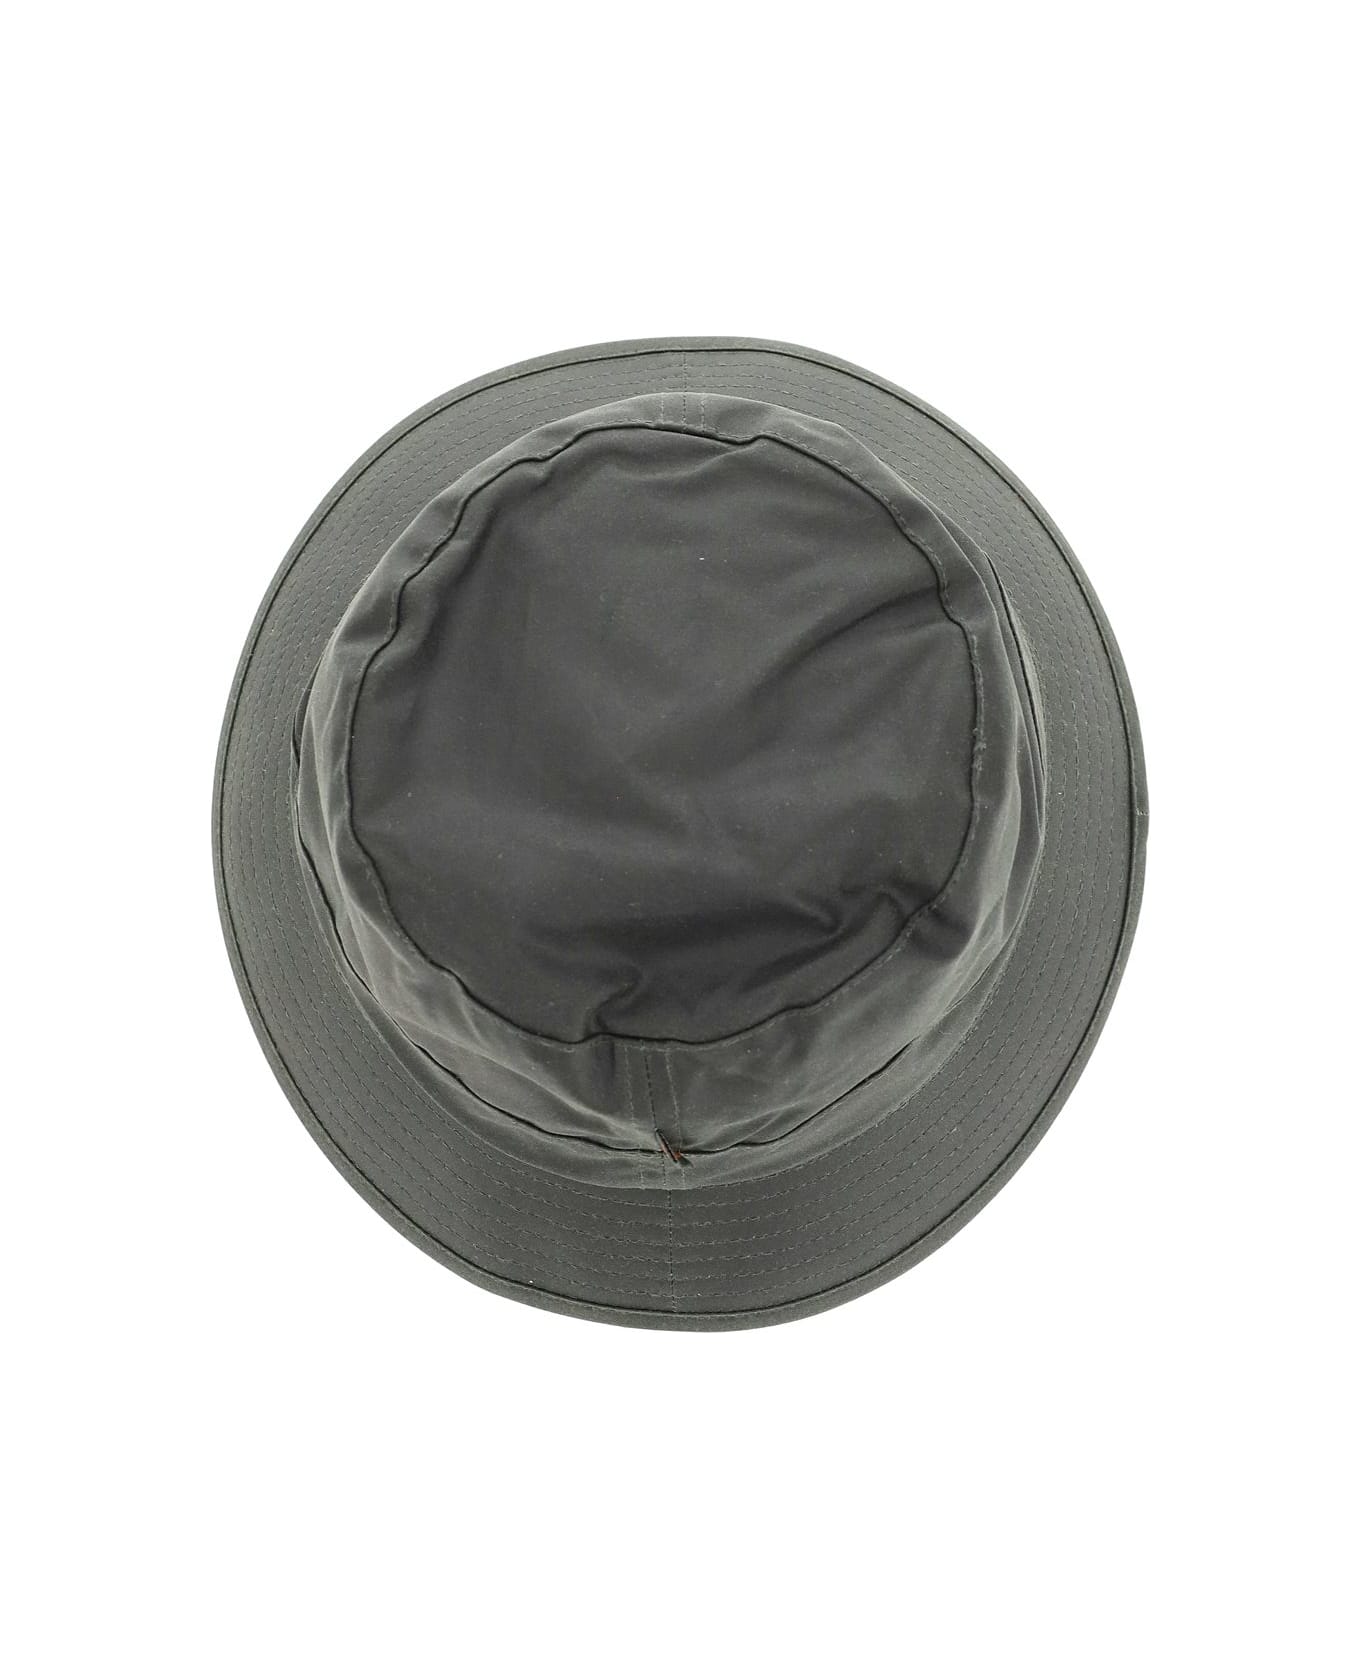 Barbour Waxed Bucket Hat - SAGE (Green)